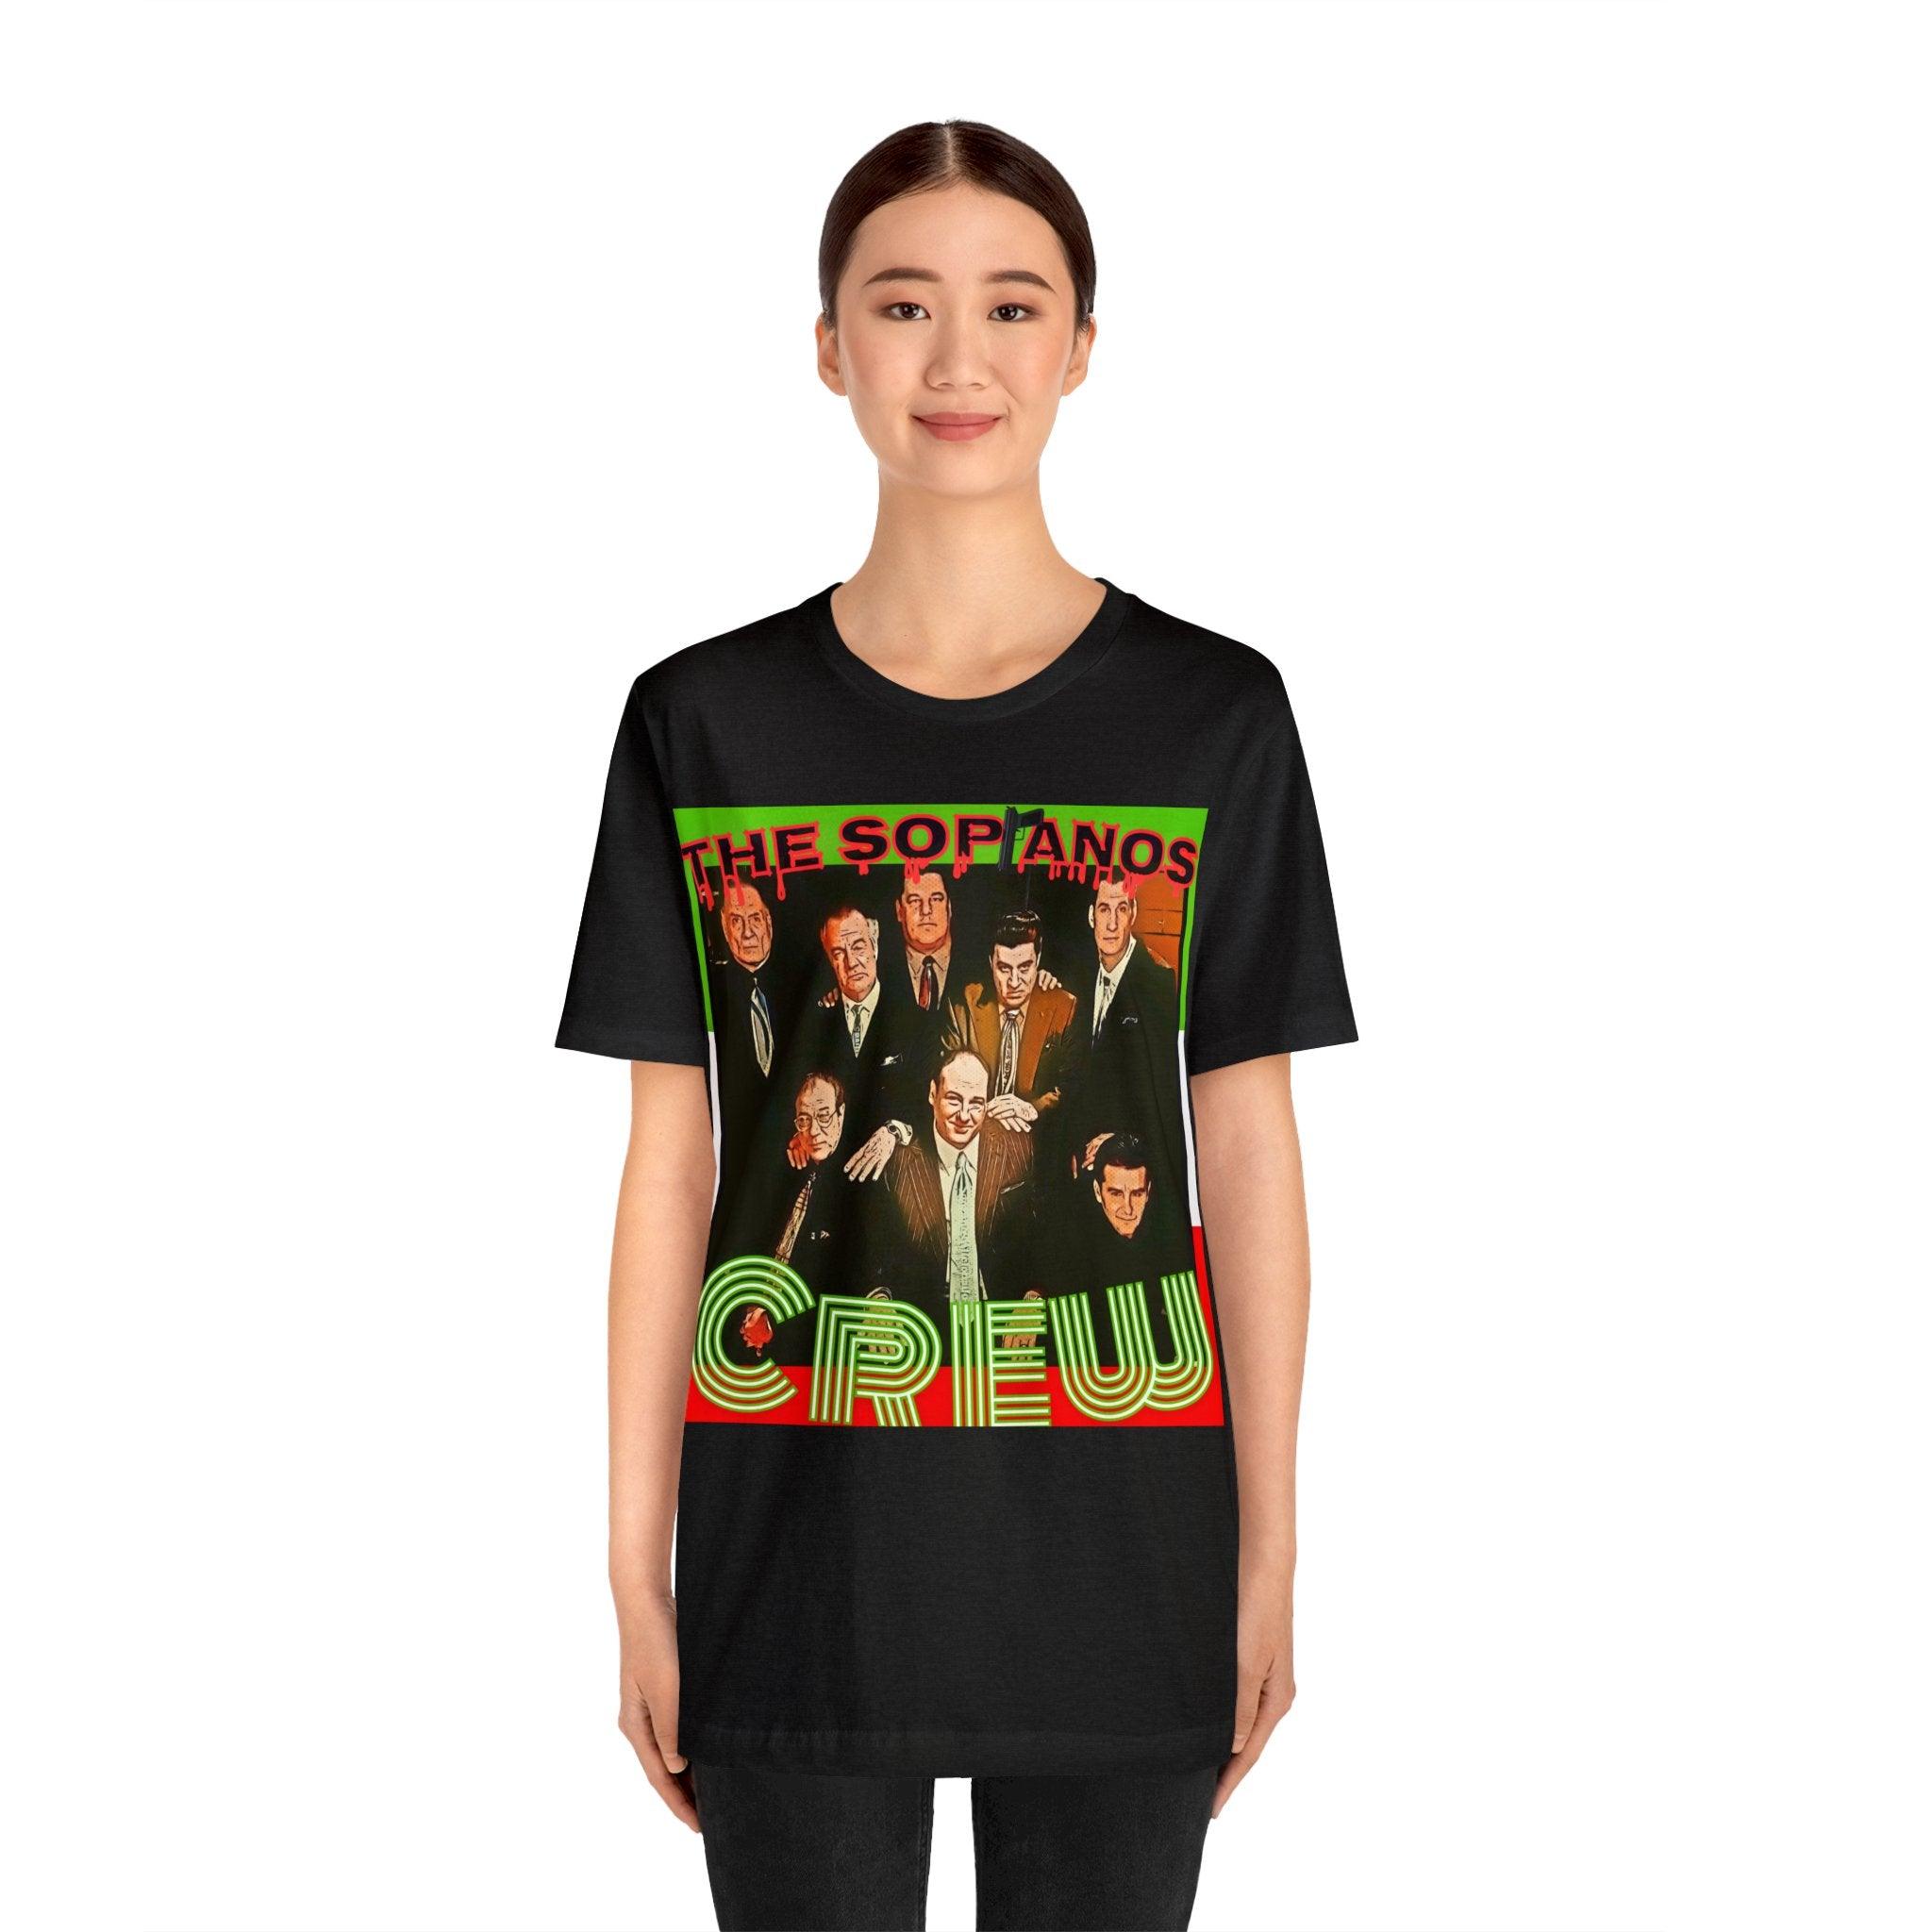 Sopranos Crew T-Shirt - Epic Shirts 403